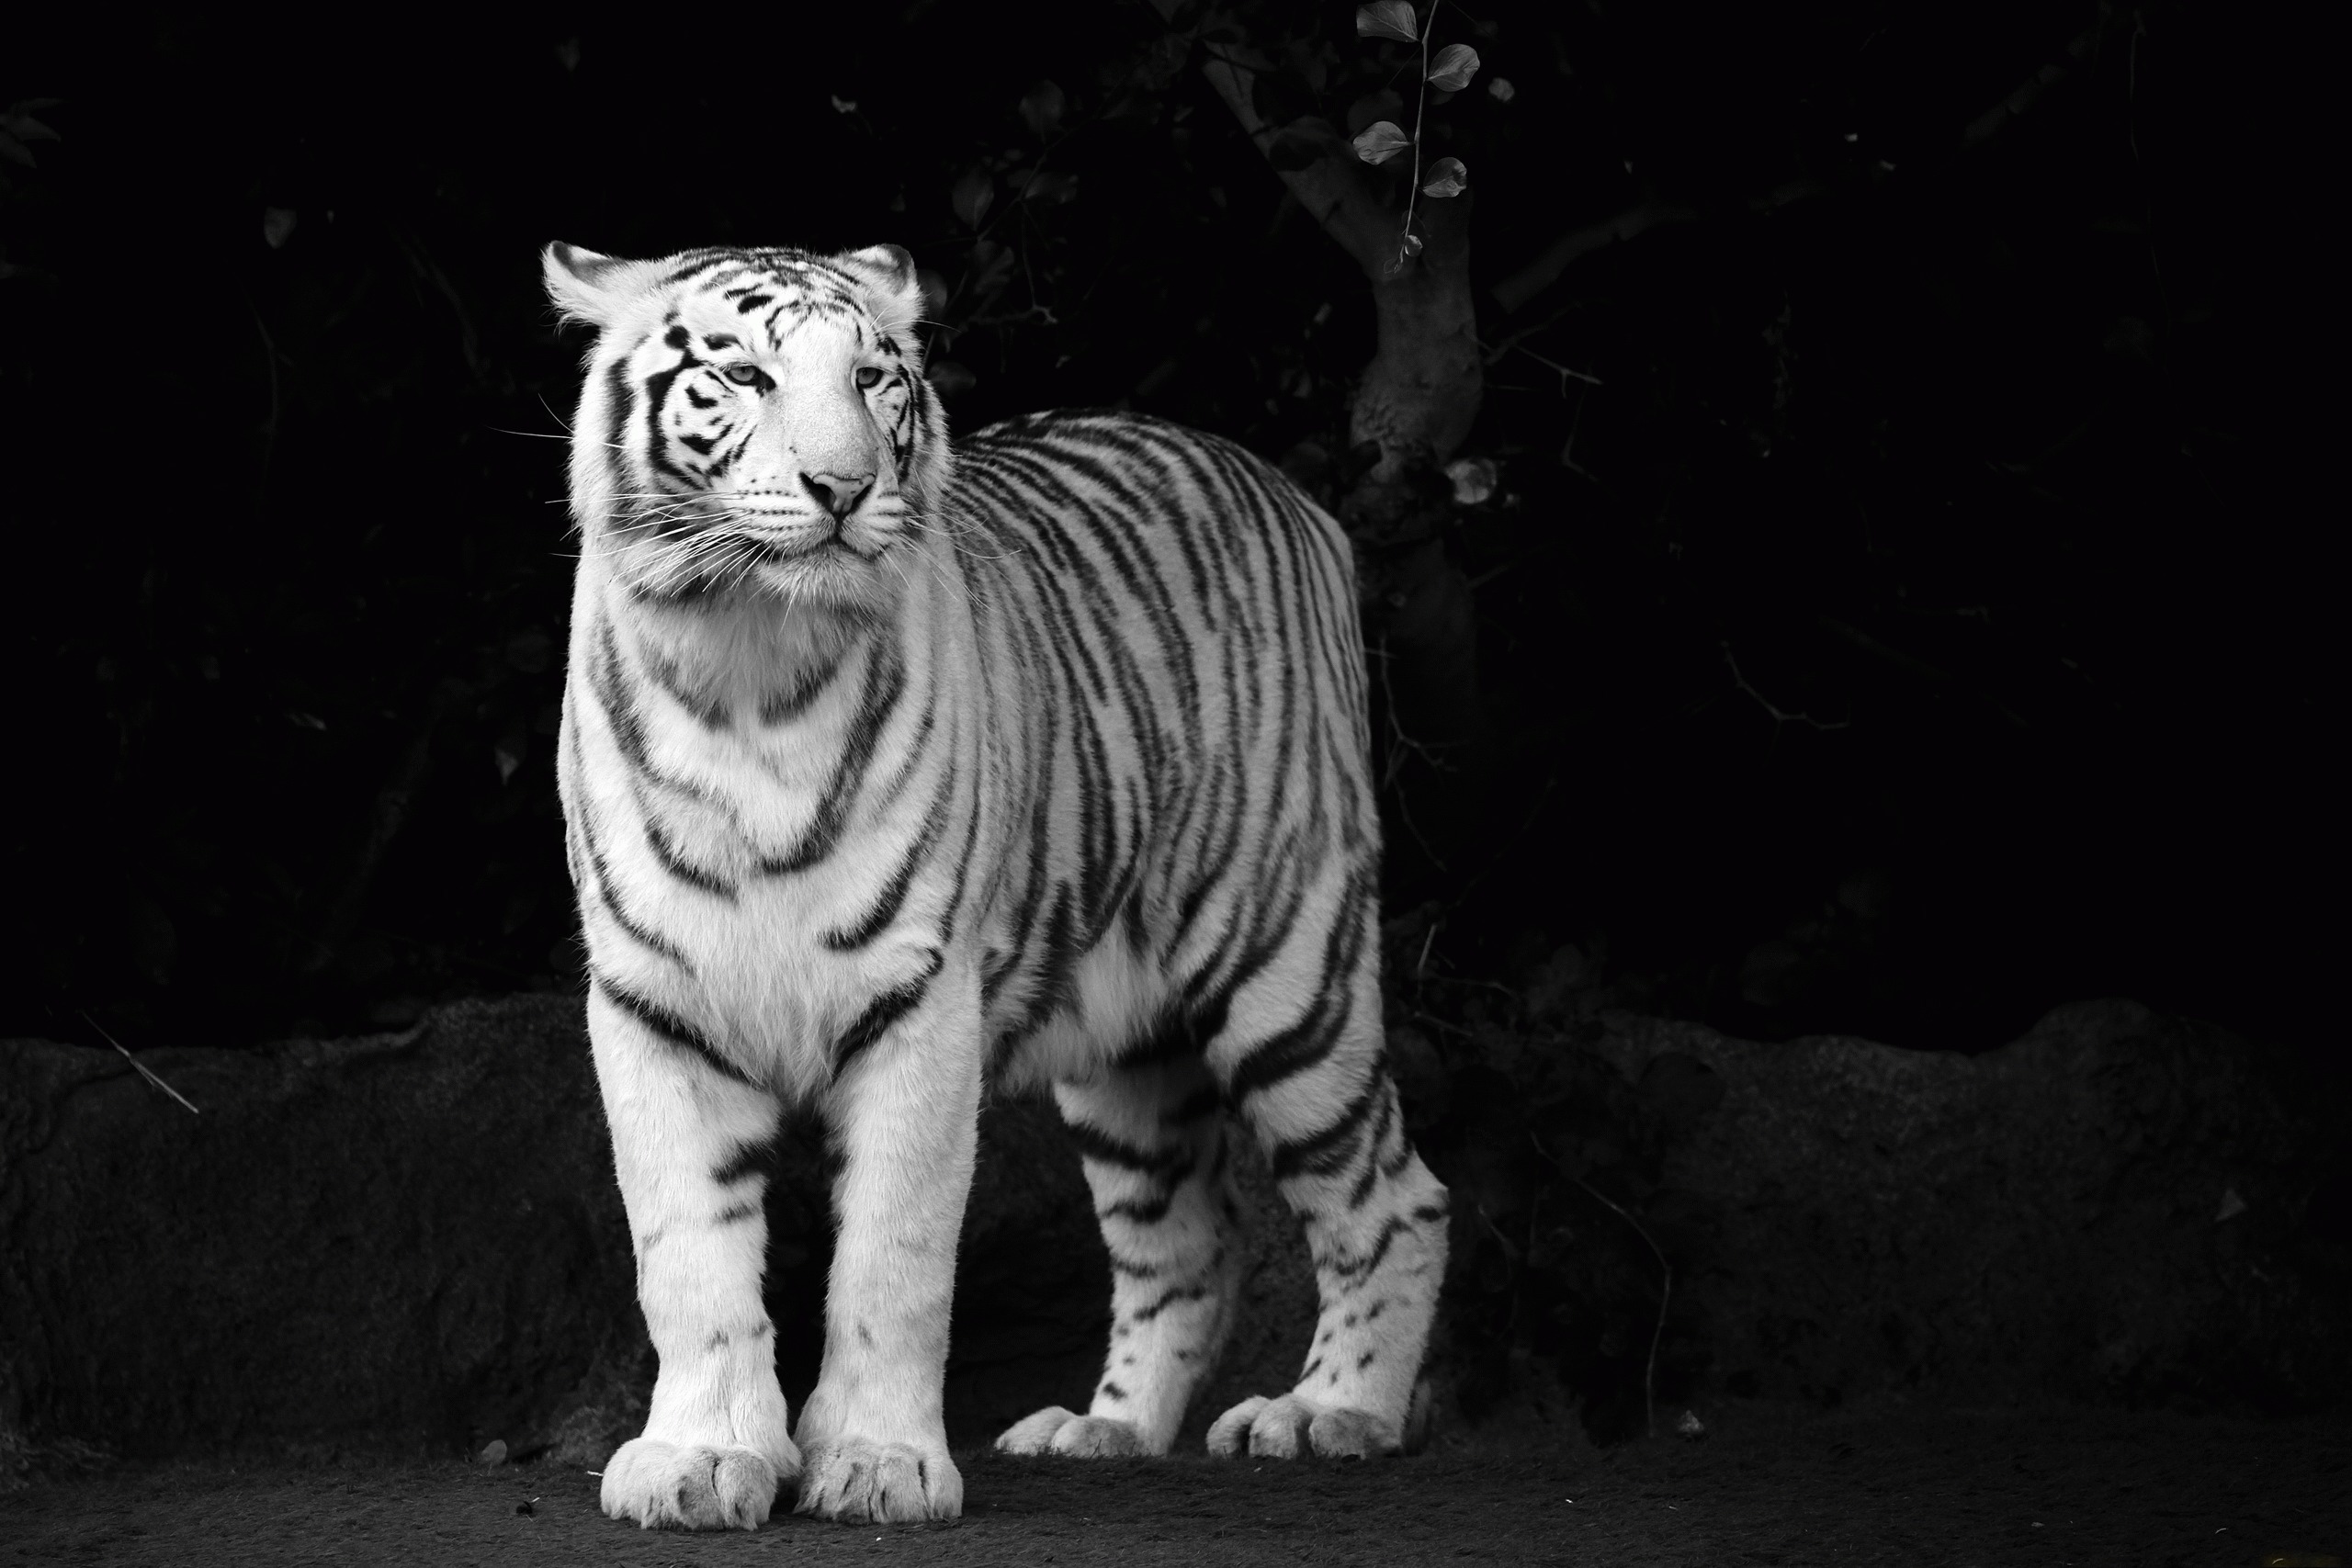 kaplan wallpaper,tigre,tigre de bengala,blanco,negro,felidae